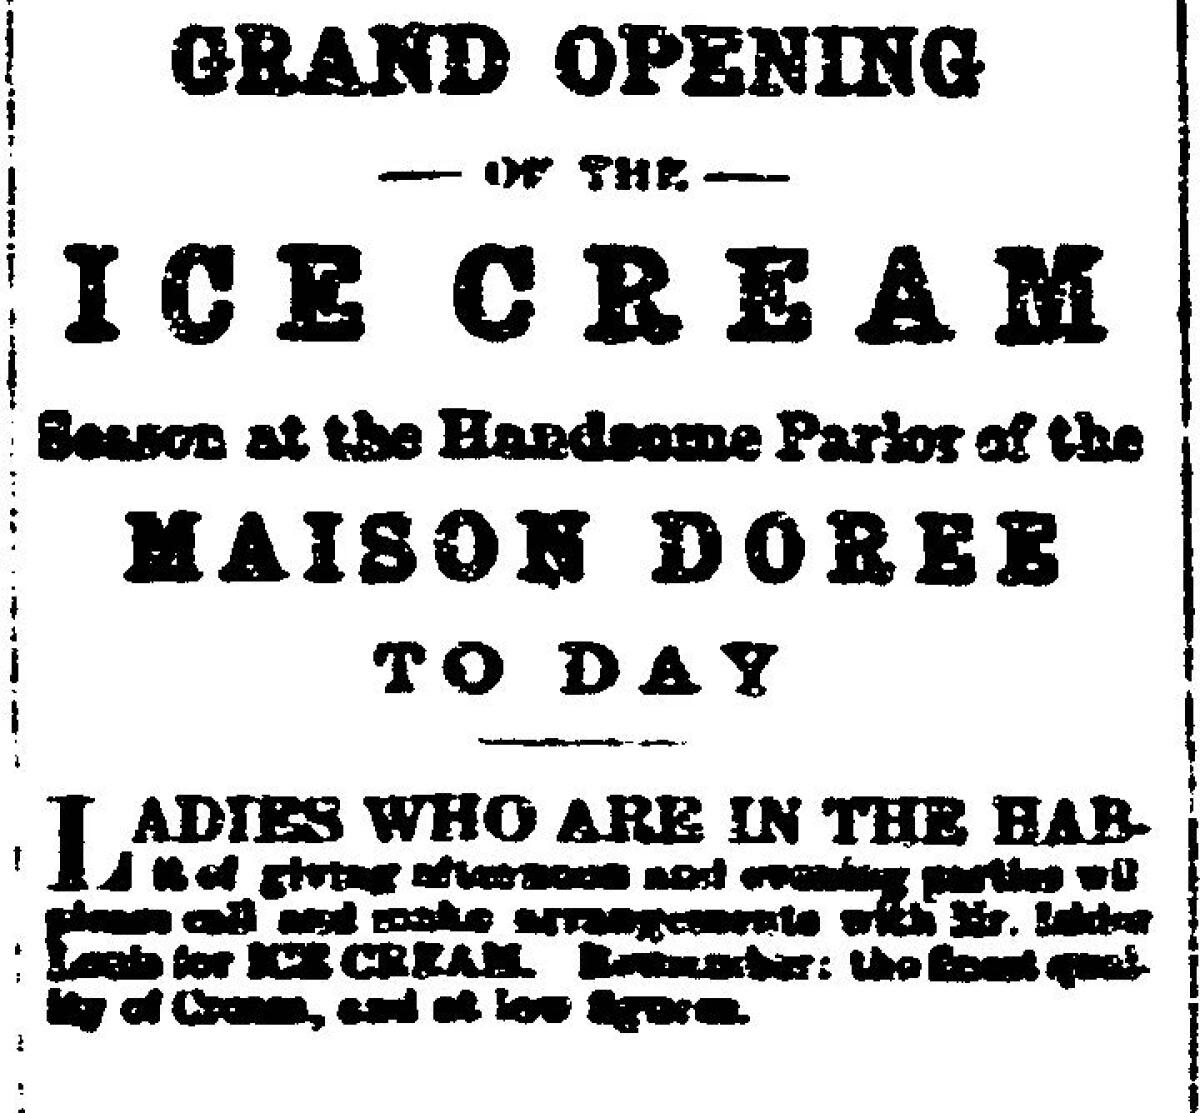 Ice cream parlors  Restaurant-ing through history